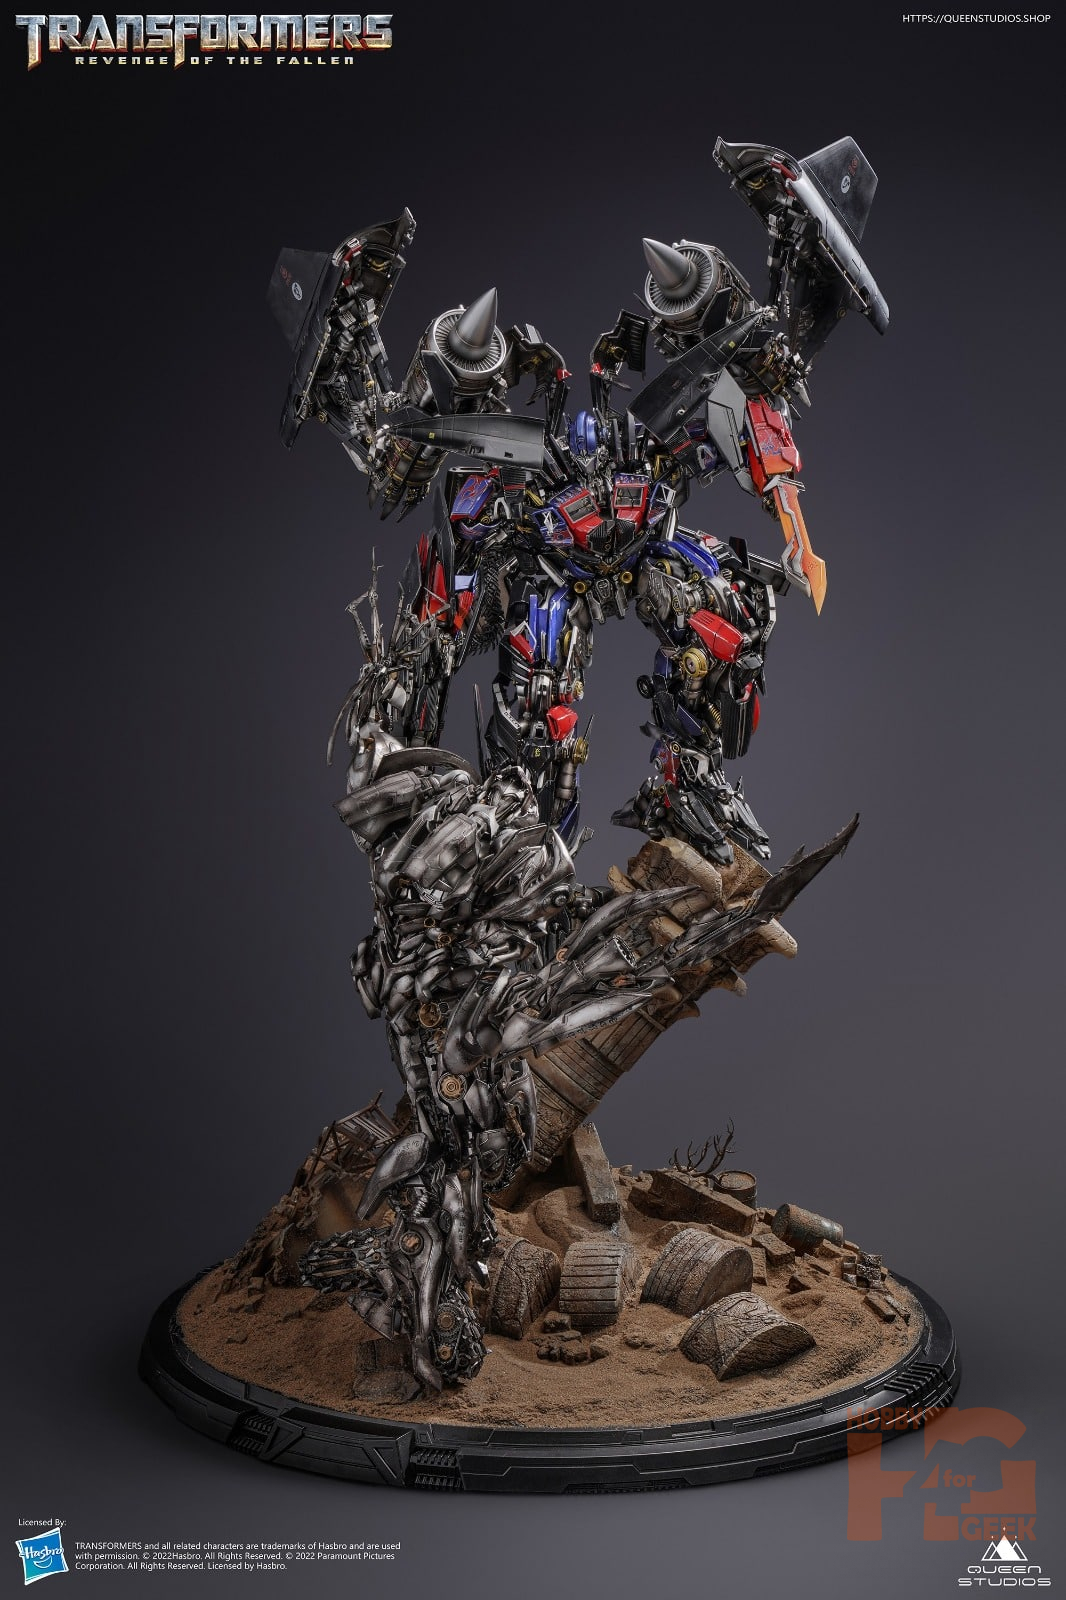 queen-studios-transformers-revenge-of-the-fallen-jetpower-optimus-prime-vs-megatron-diorama